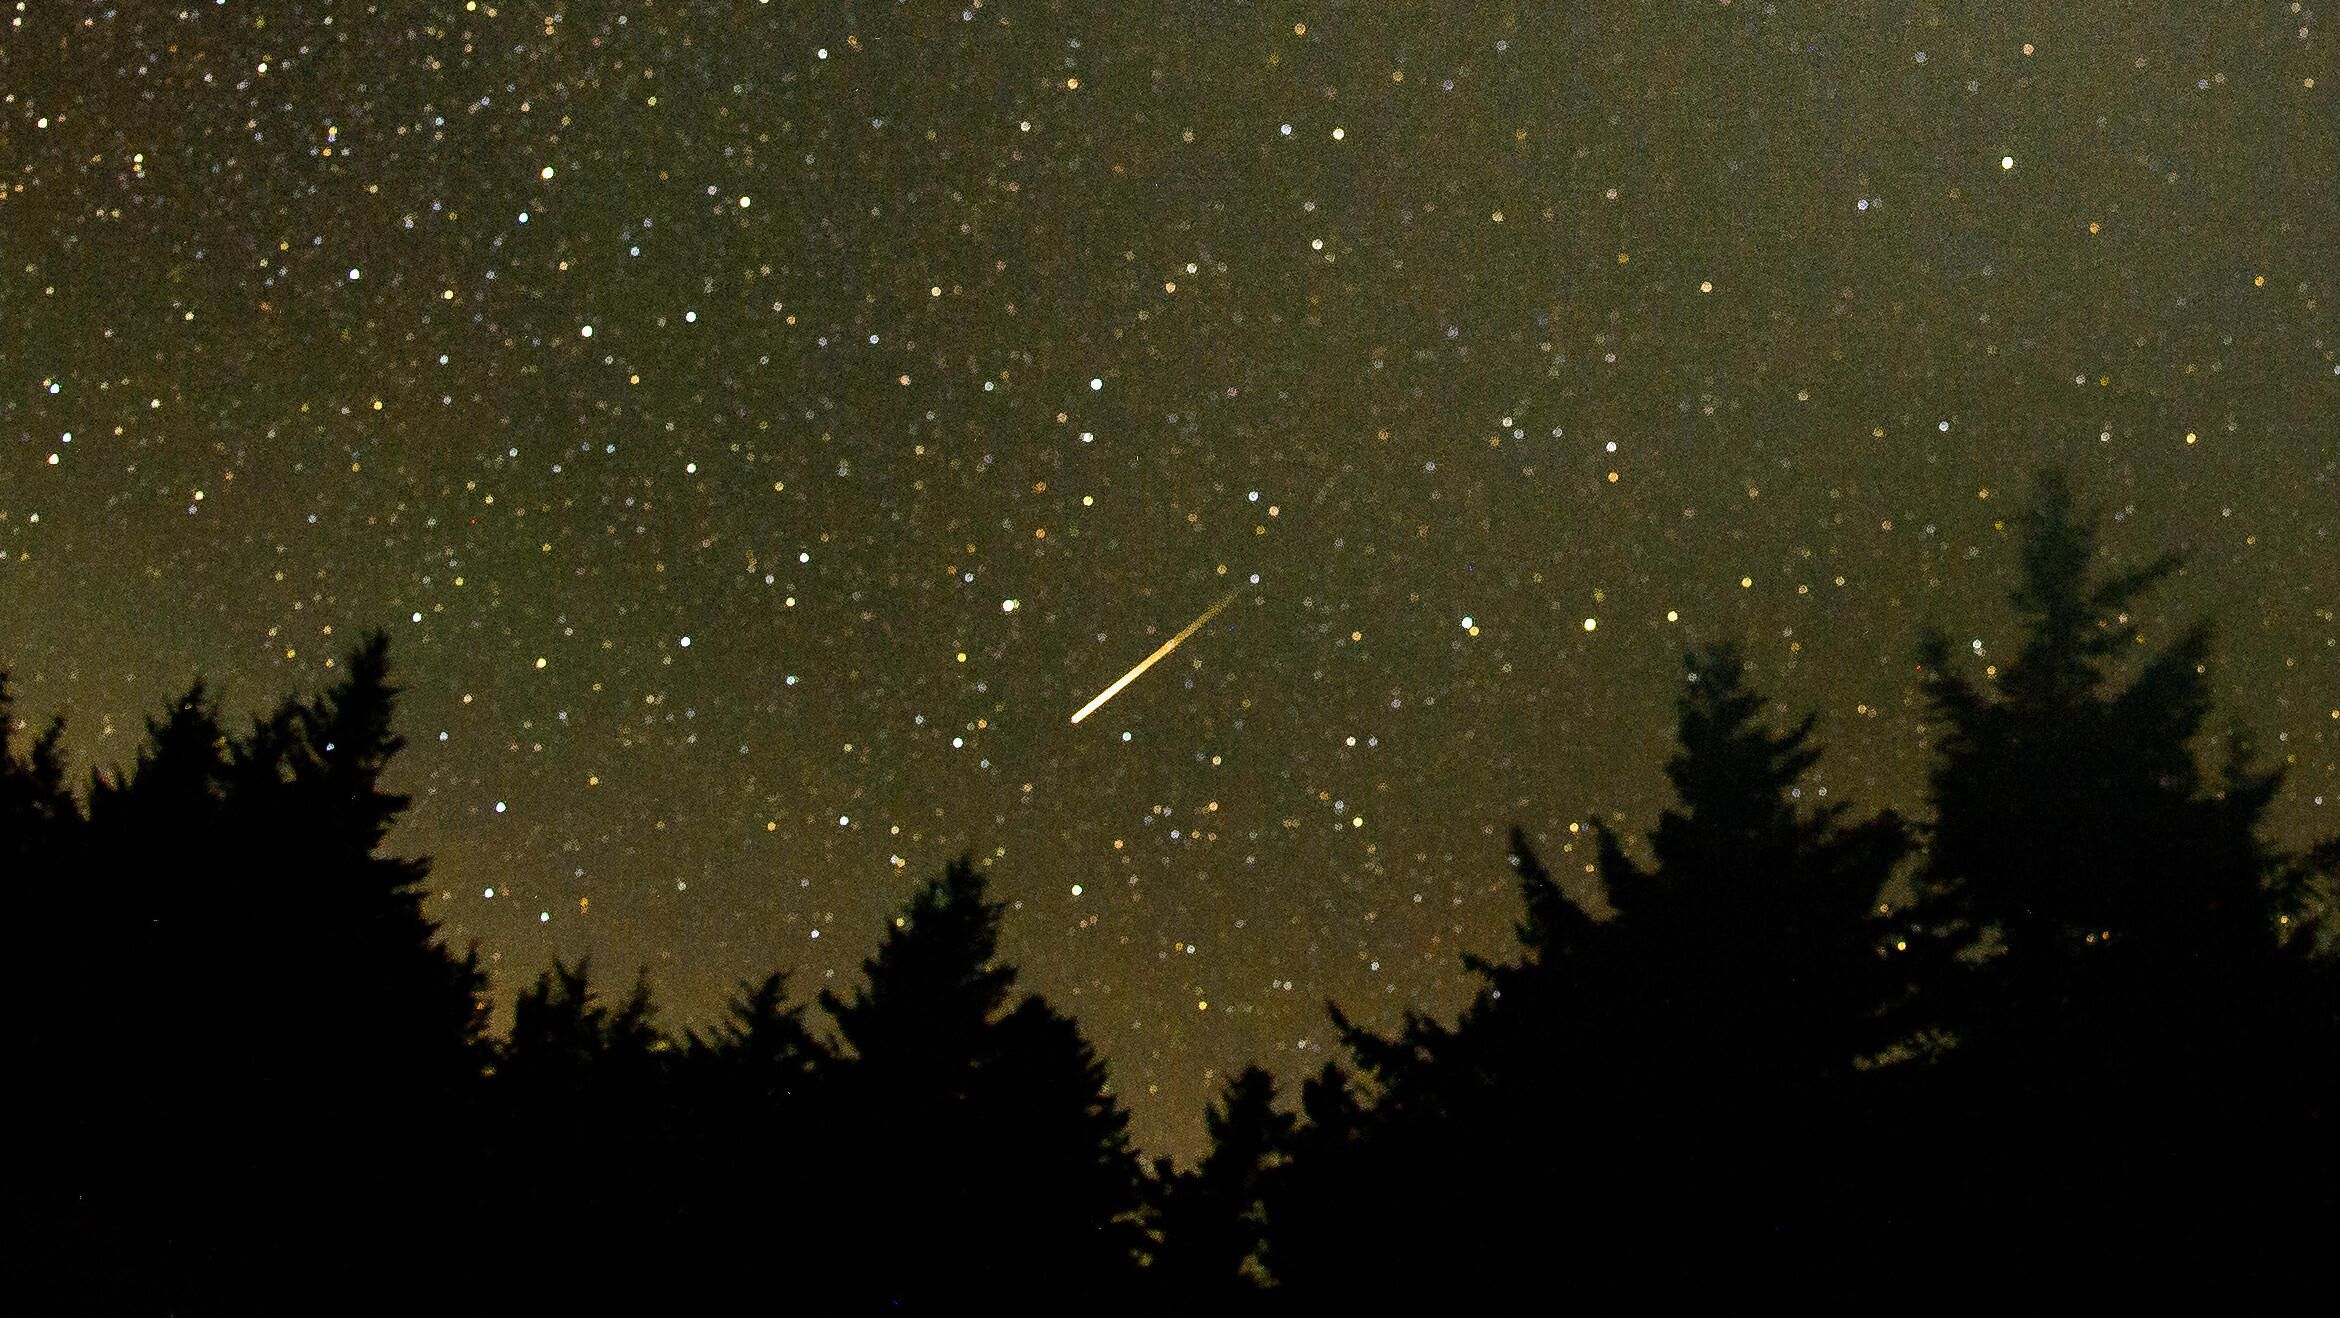 Perseids meteor shower